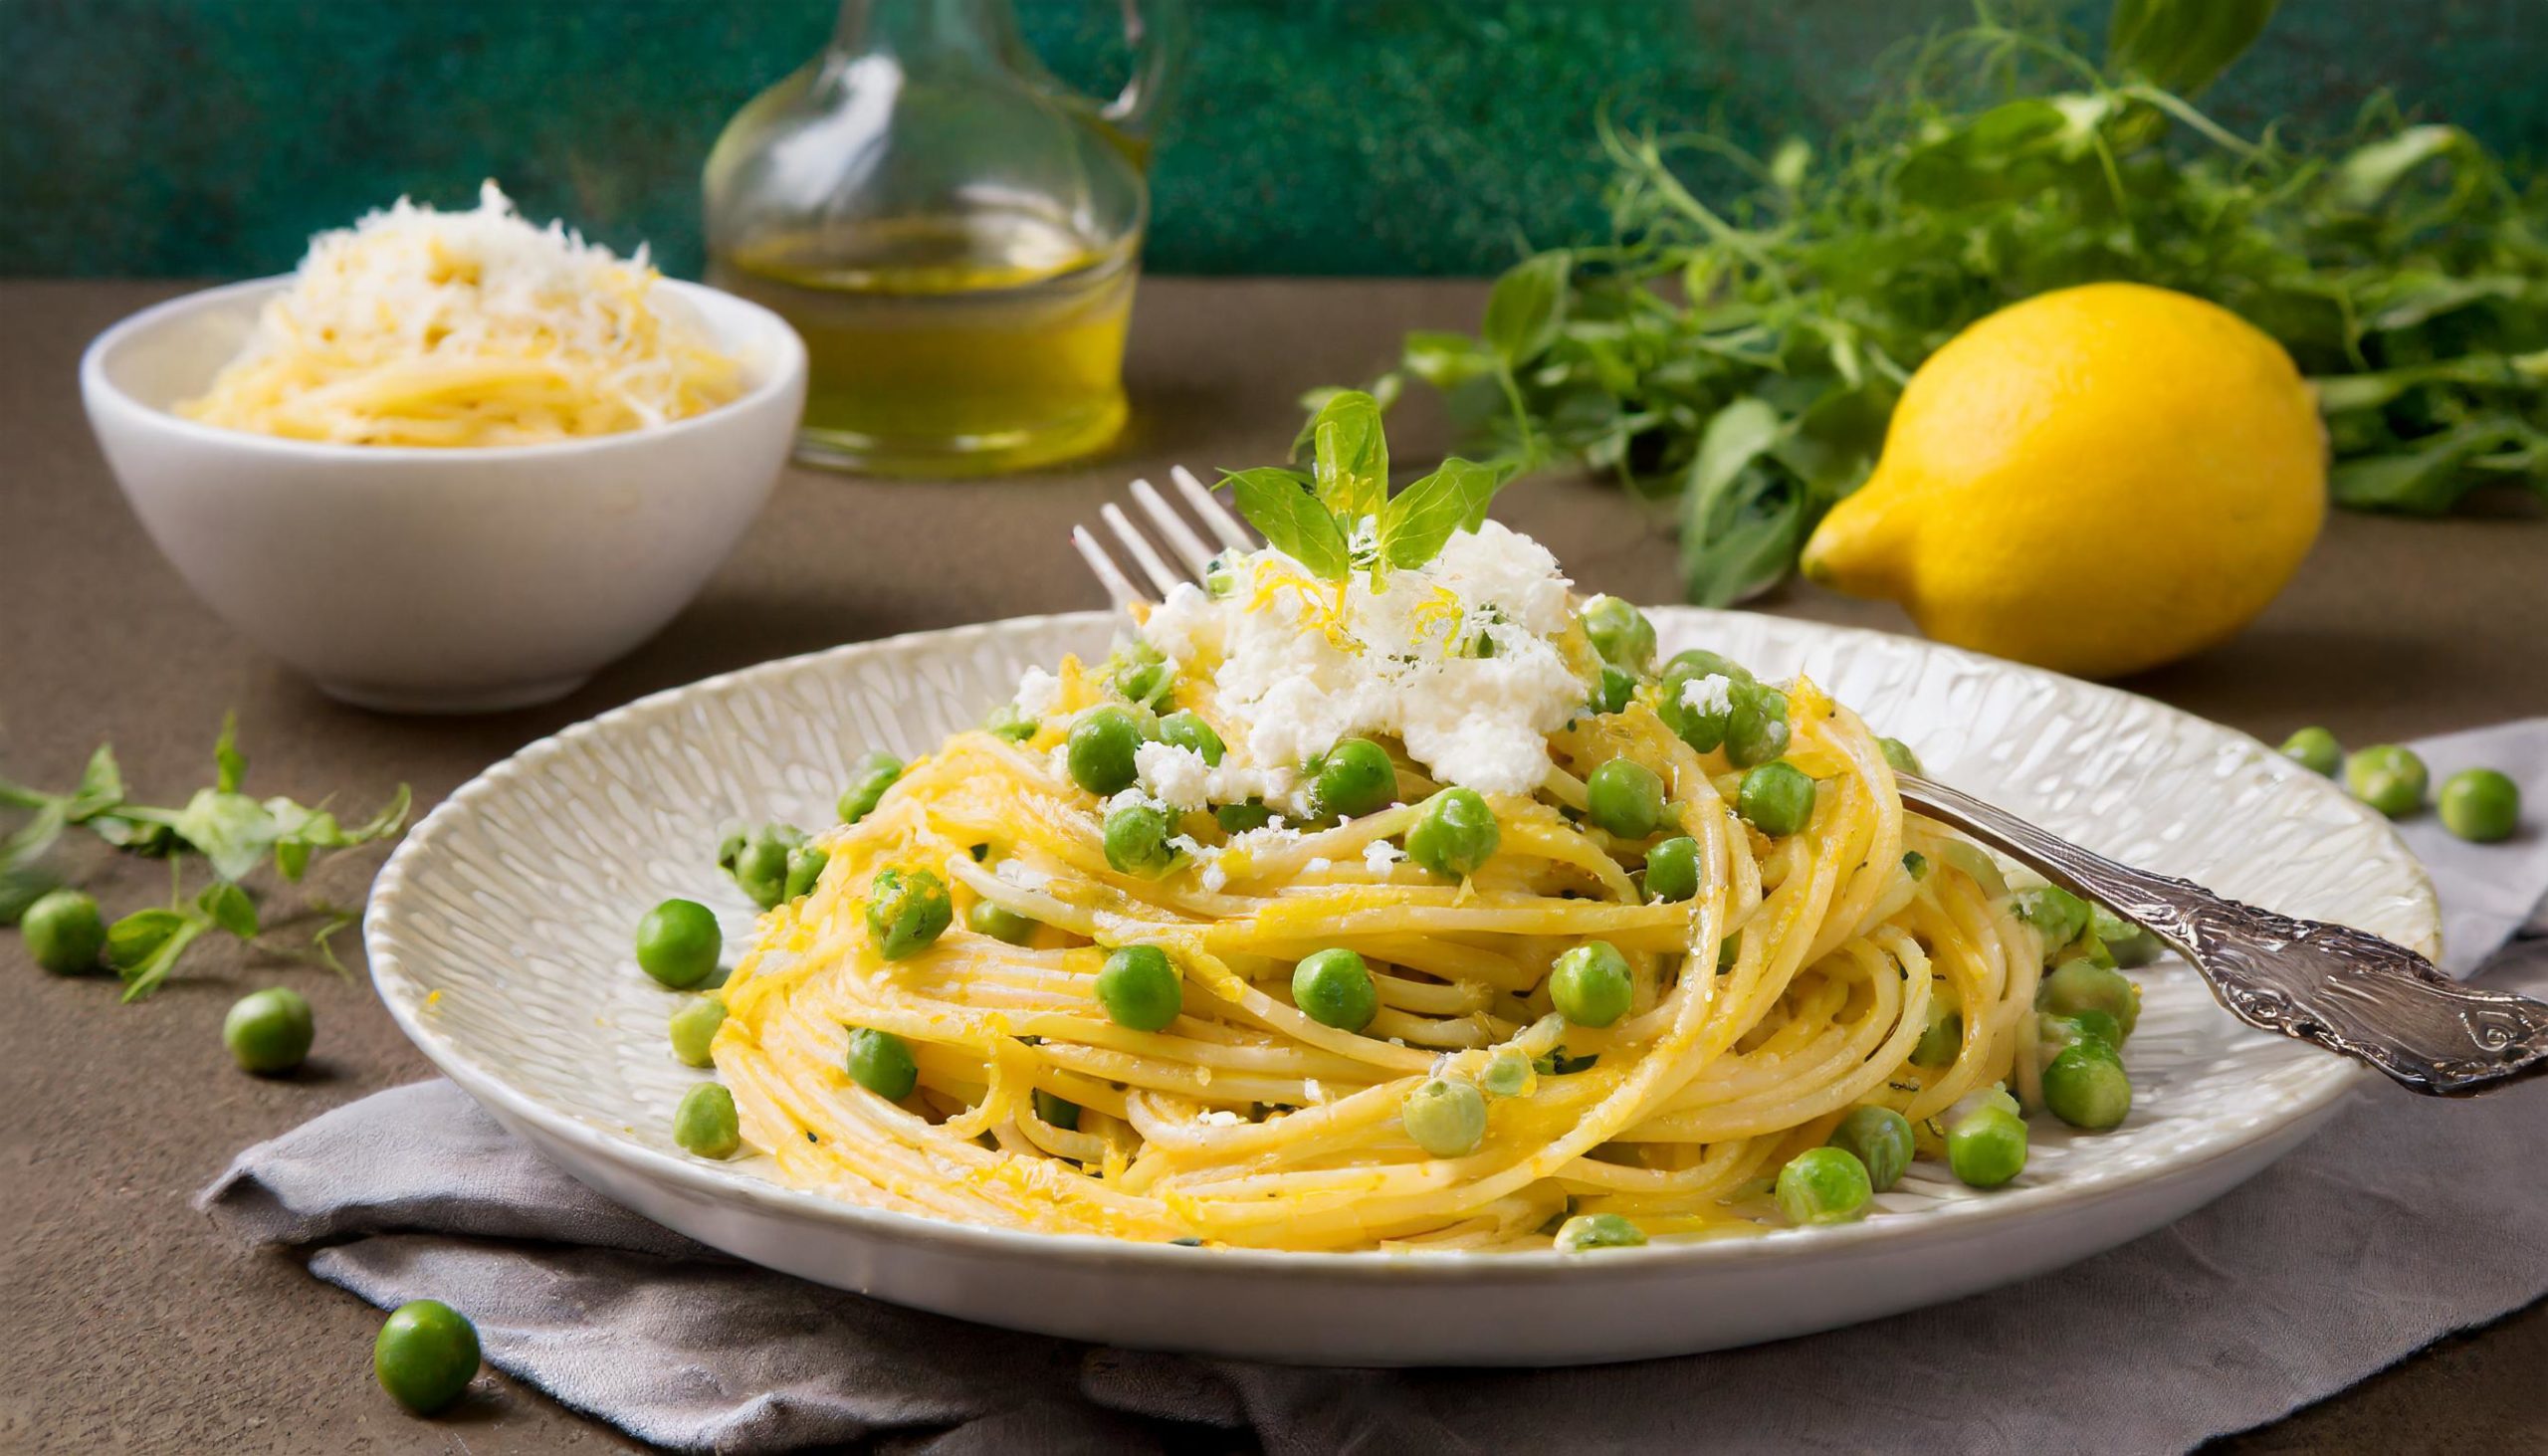 Lemony spaghetti with peas and ricotta